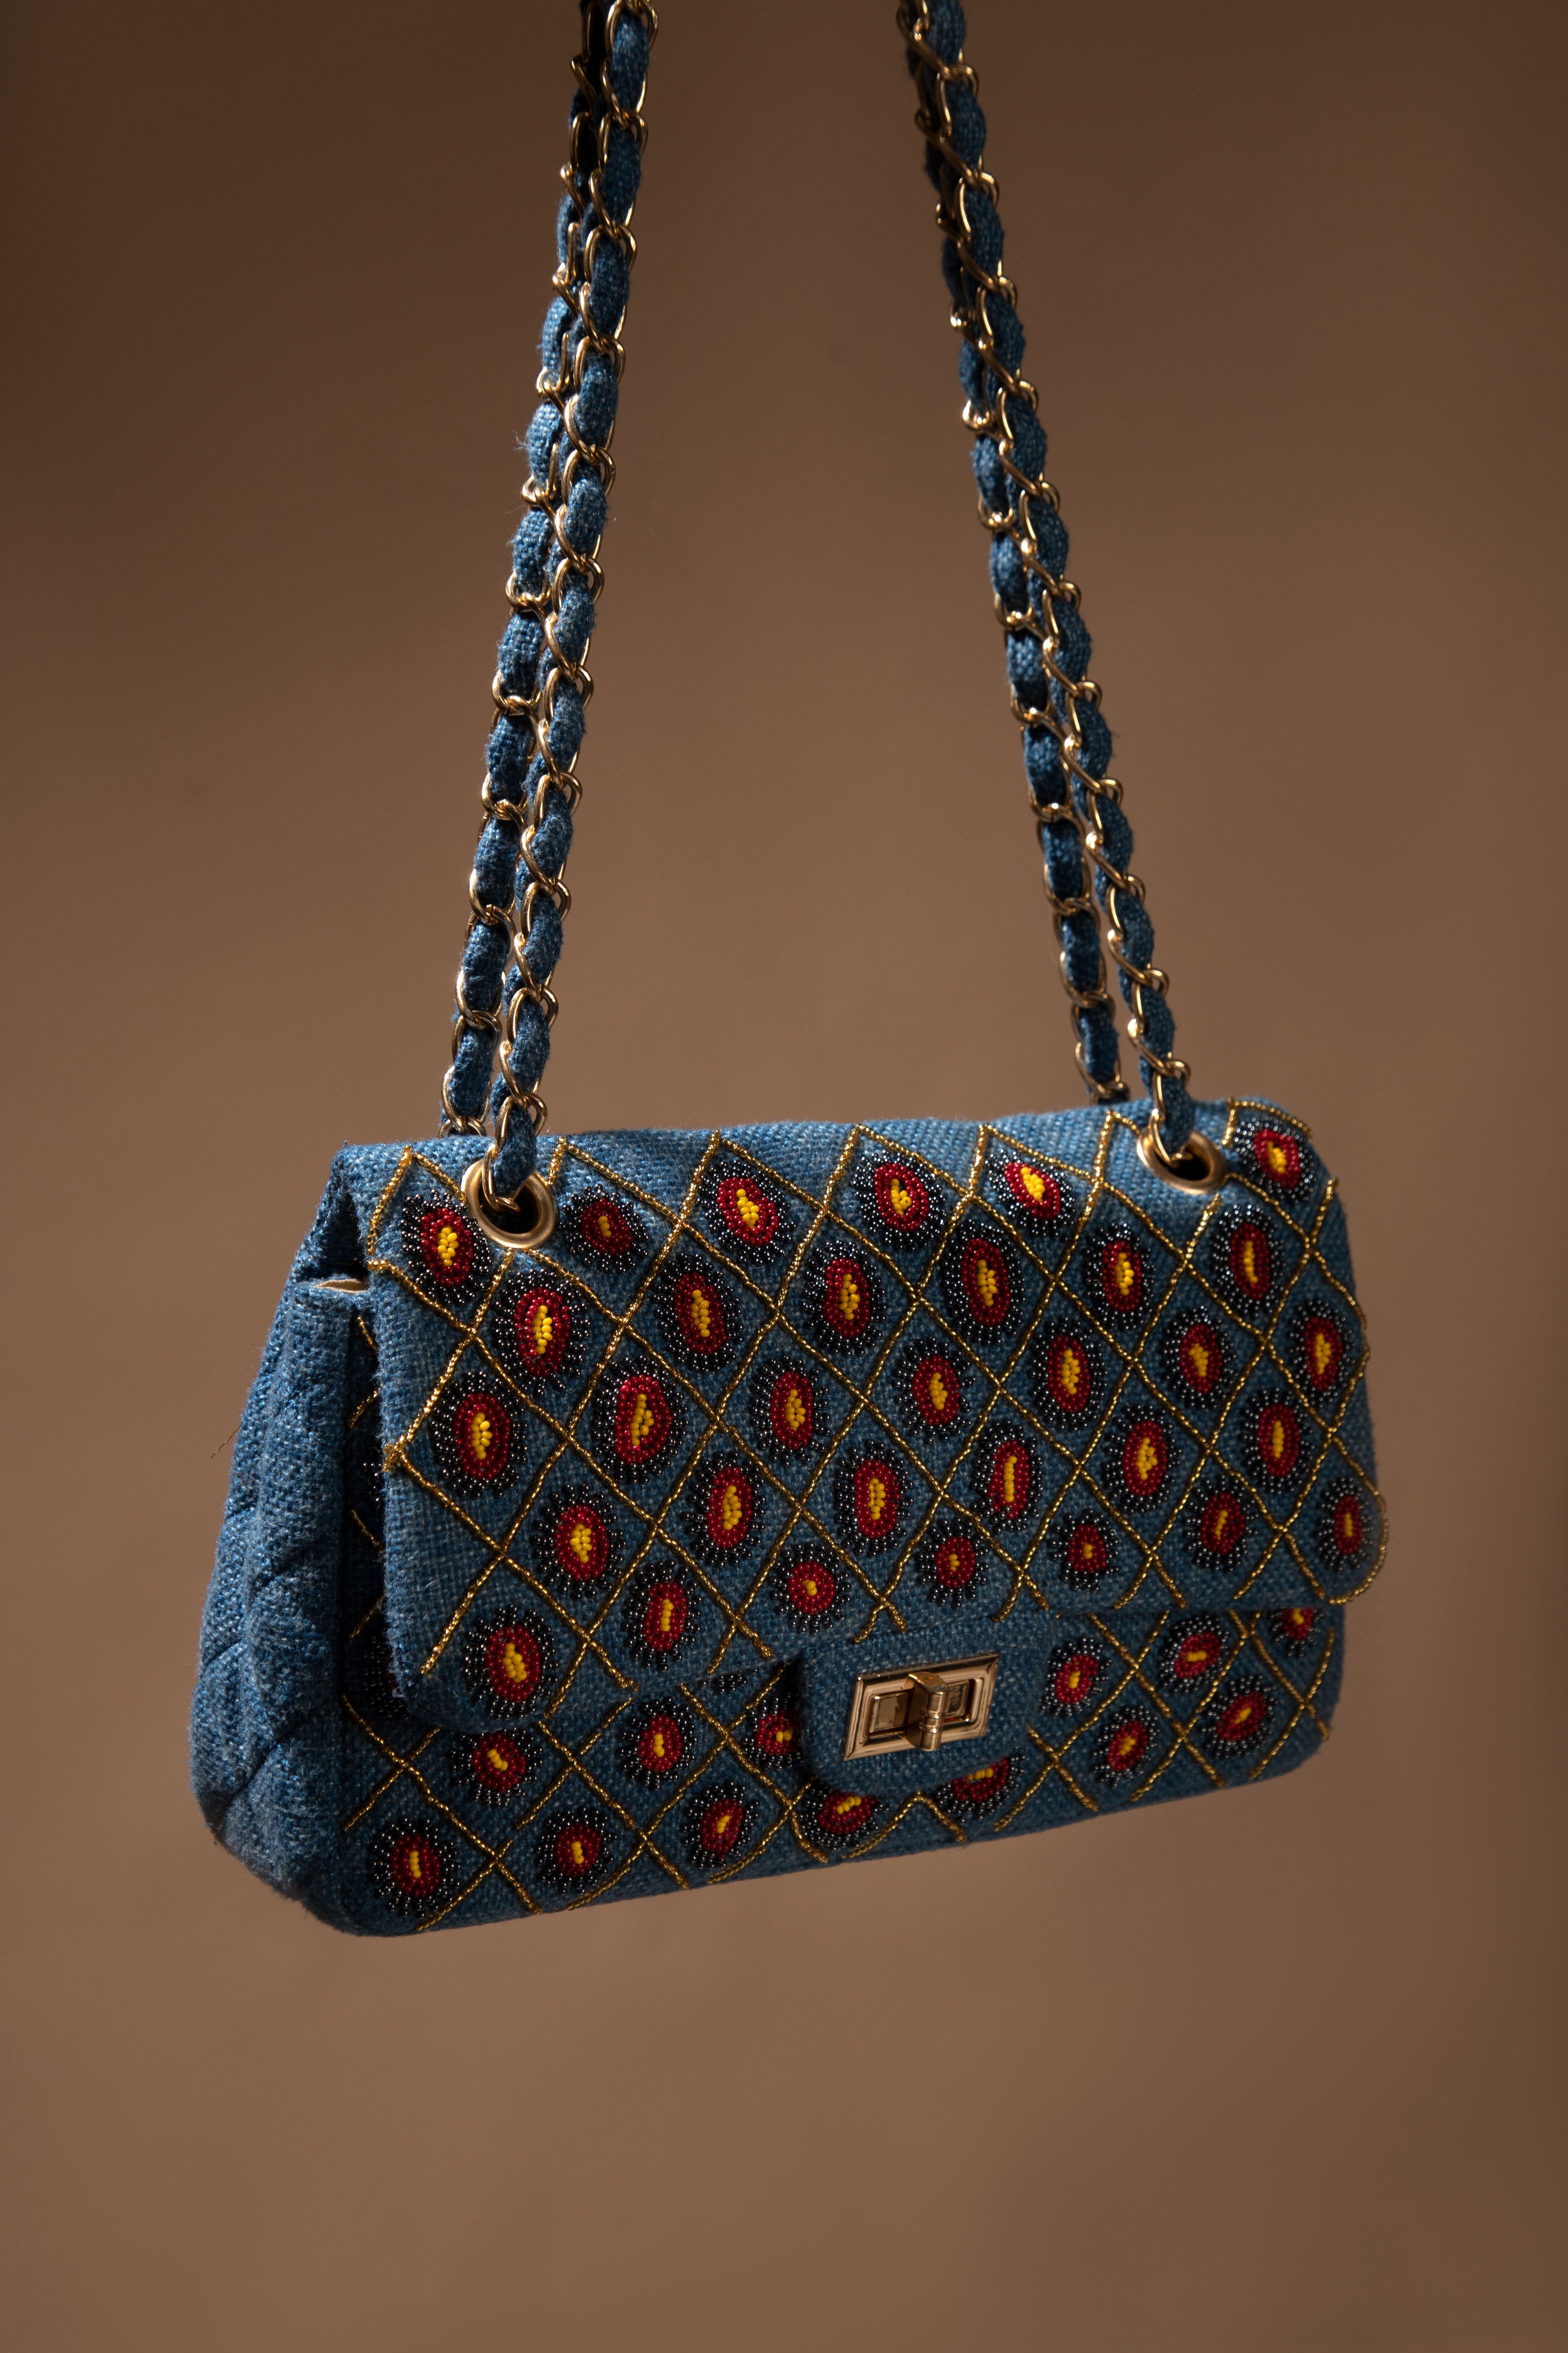 Anita Baker Bags sold by Henriette Prior | SKU 40014651 | Printerval